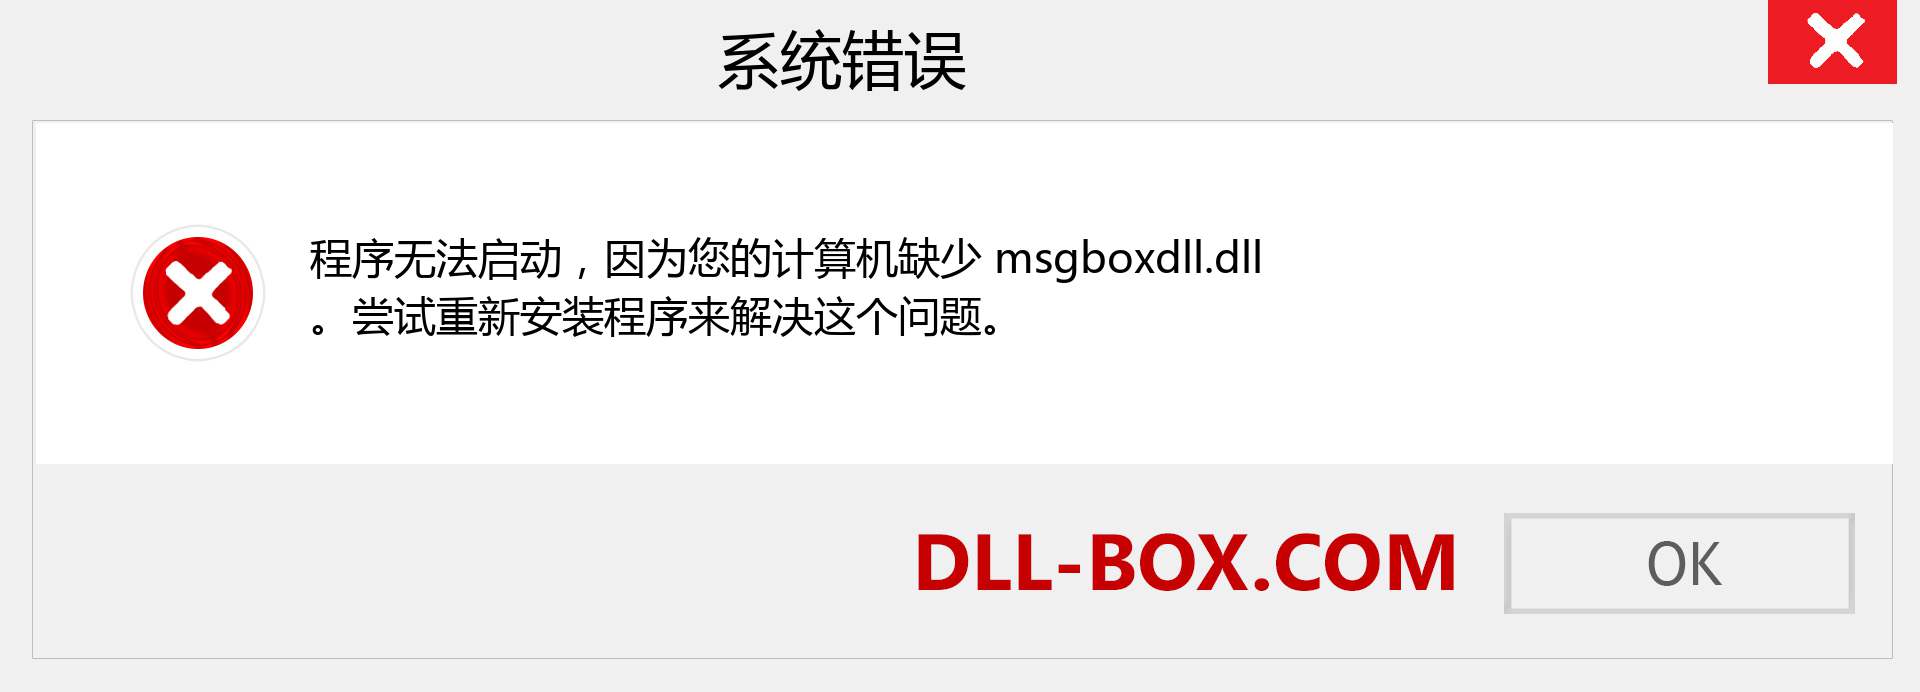 msgboxdll.dll 文件丢失？。 适用于 Windows 7、8、10 的下载 - 修复 Windows、照片、图像上的 msgboxdll dll 丢失错误